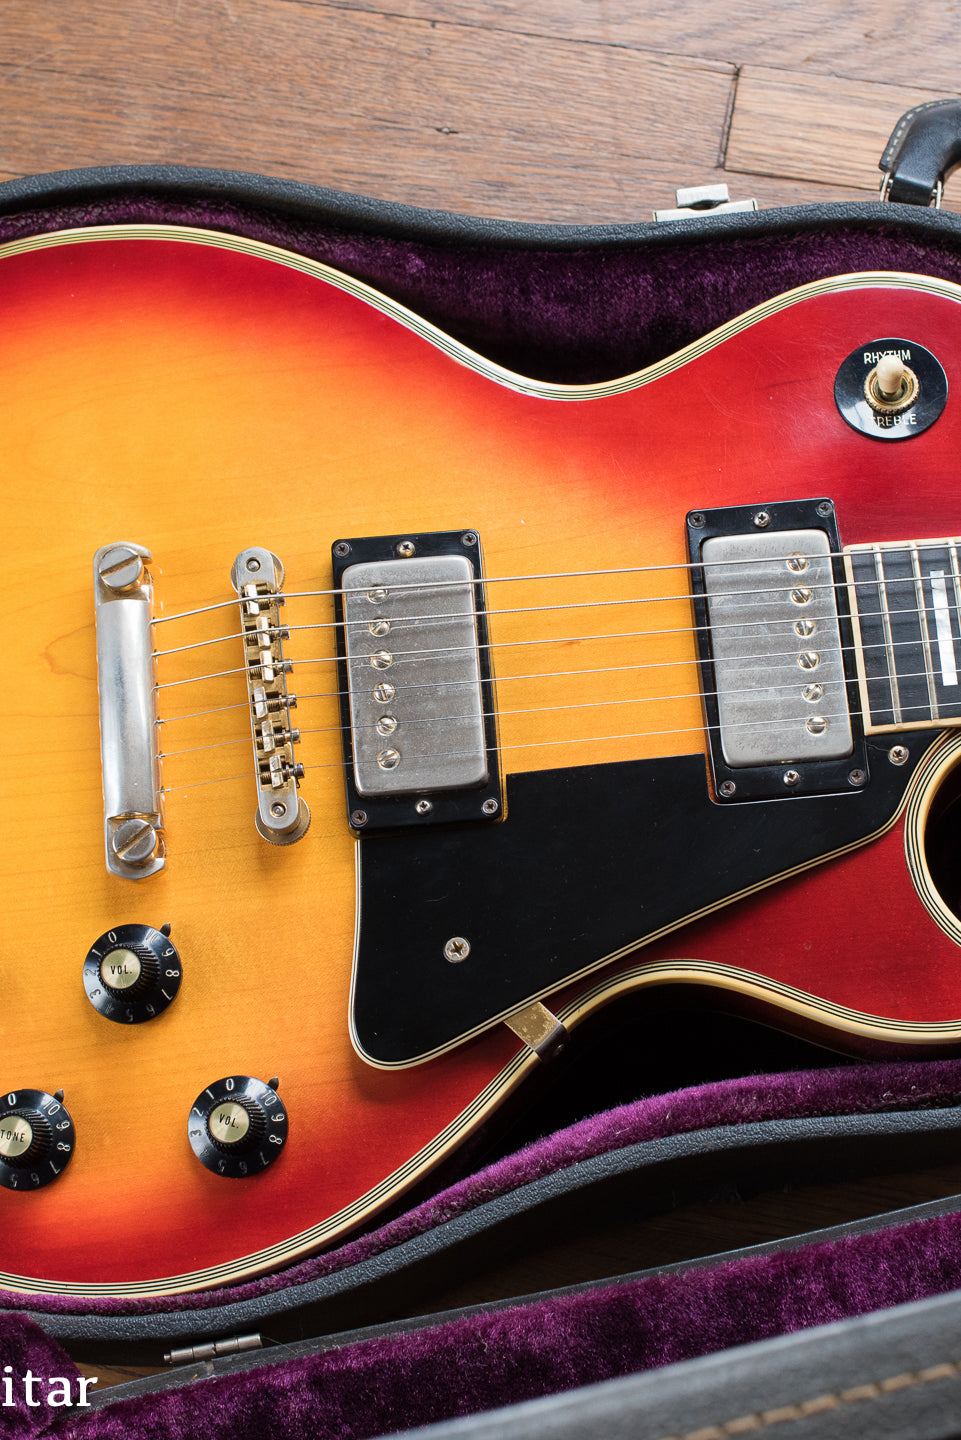 Vintage 1974 Gibson Les Paul Custom Cherry Sunburst in original case